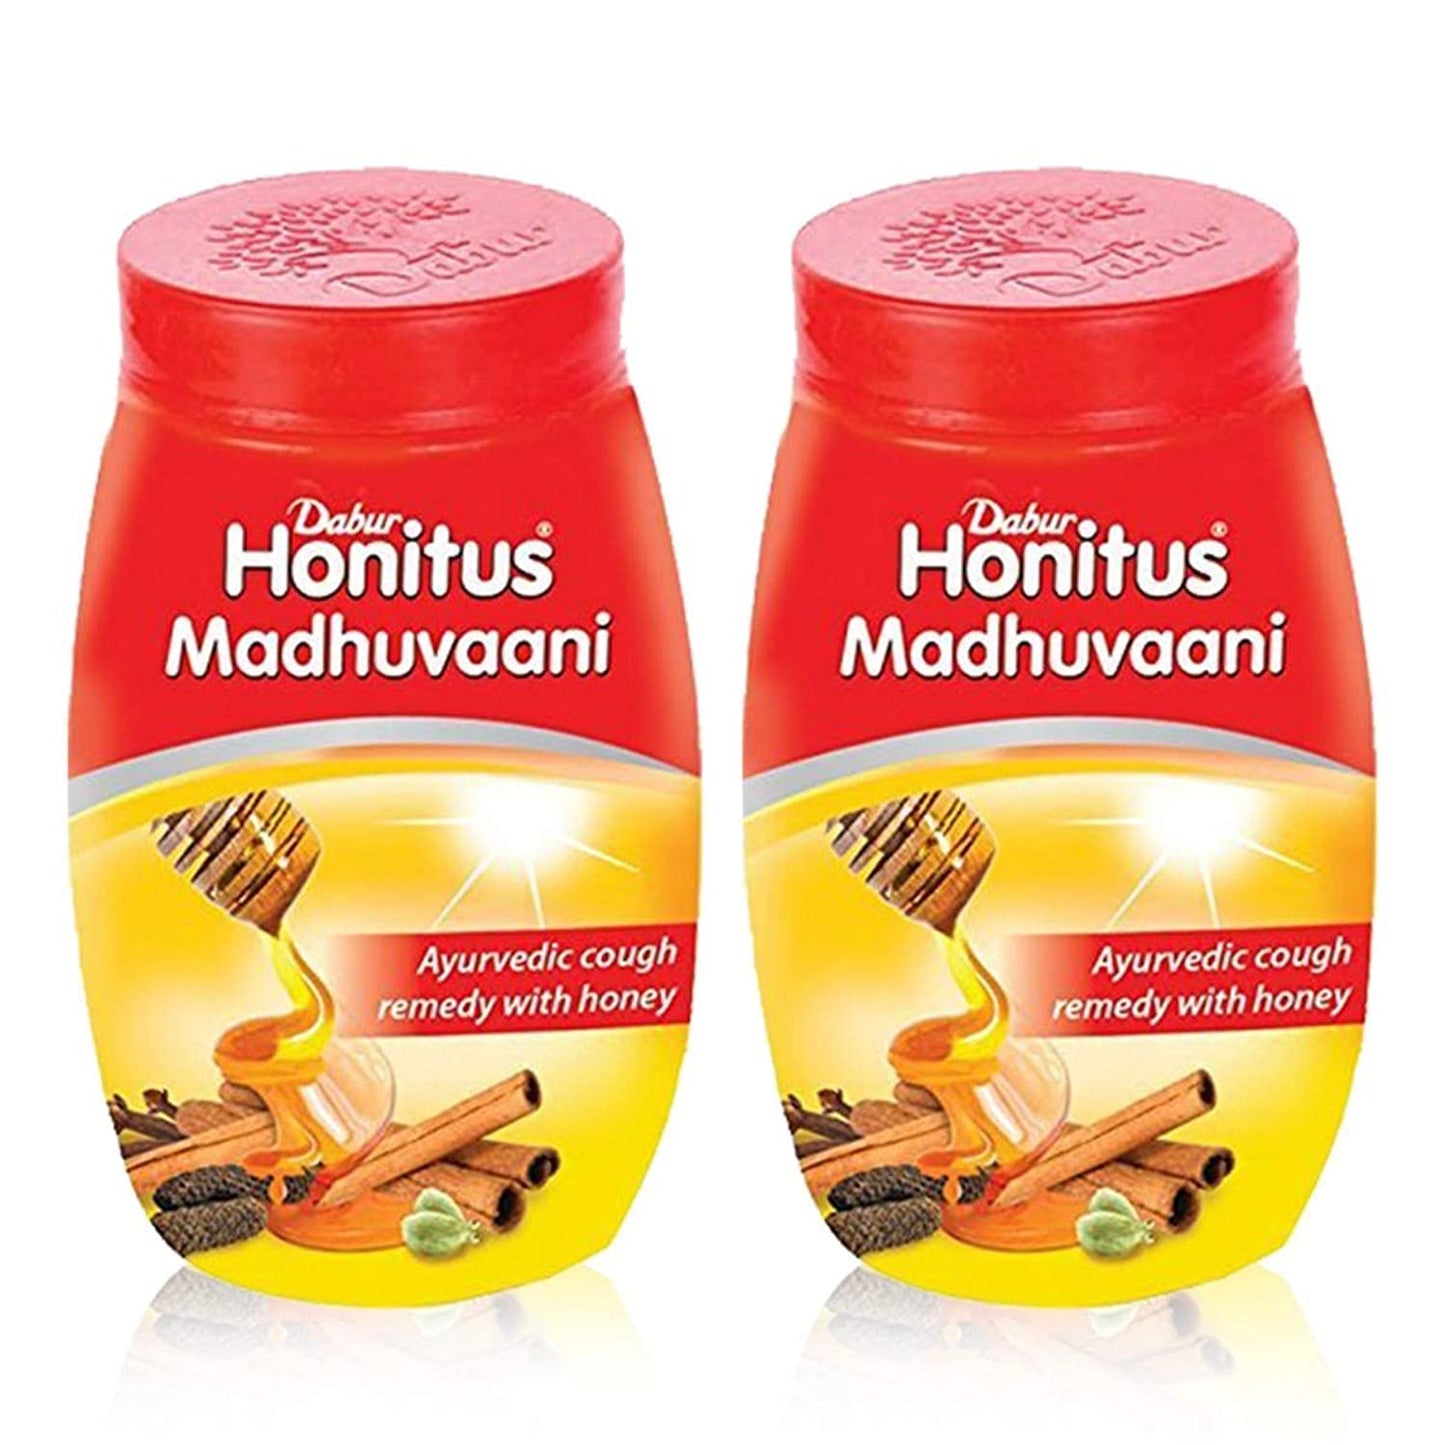 Dabur Honitus Madhuvaani (150gm each) - Pack of 2,Dabur Honitus Madhuvaani 